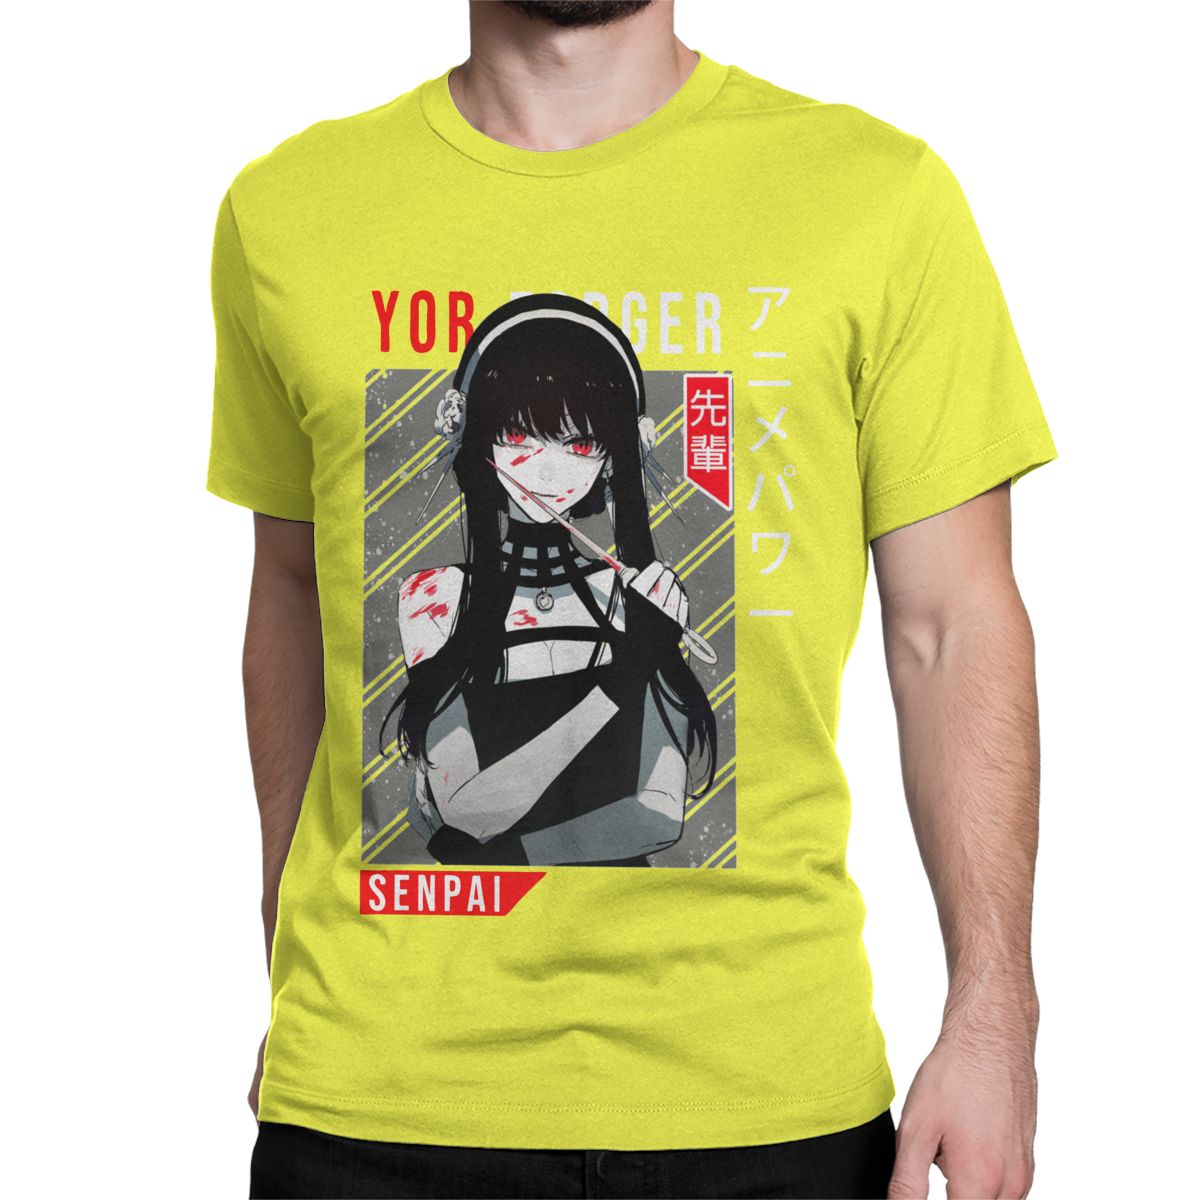 Anime Spy X Family Anime Yor Forger Assassin T Shirt